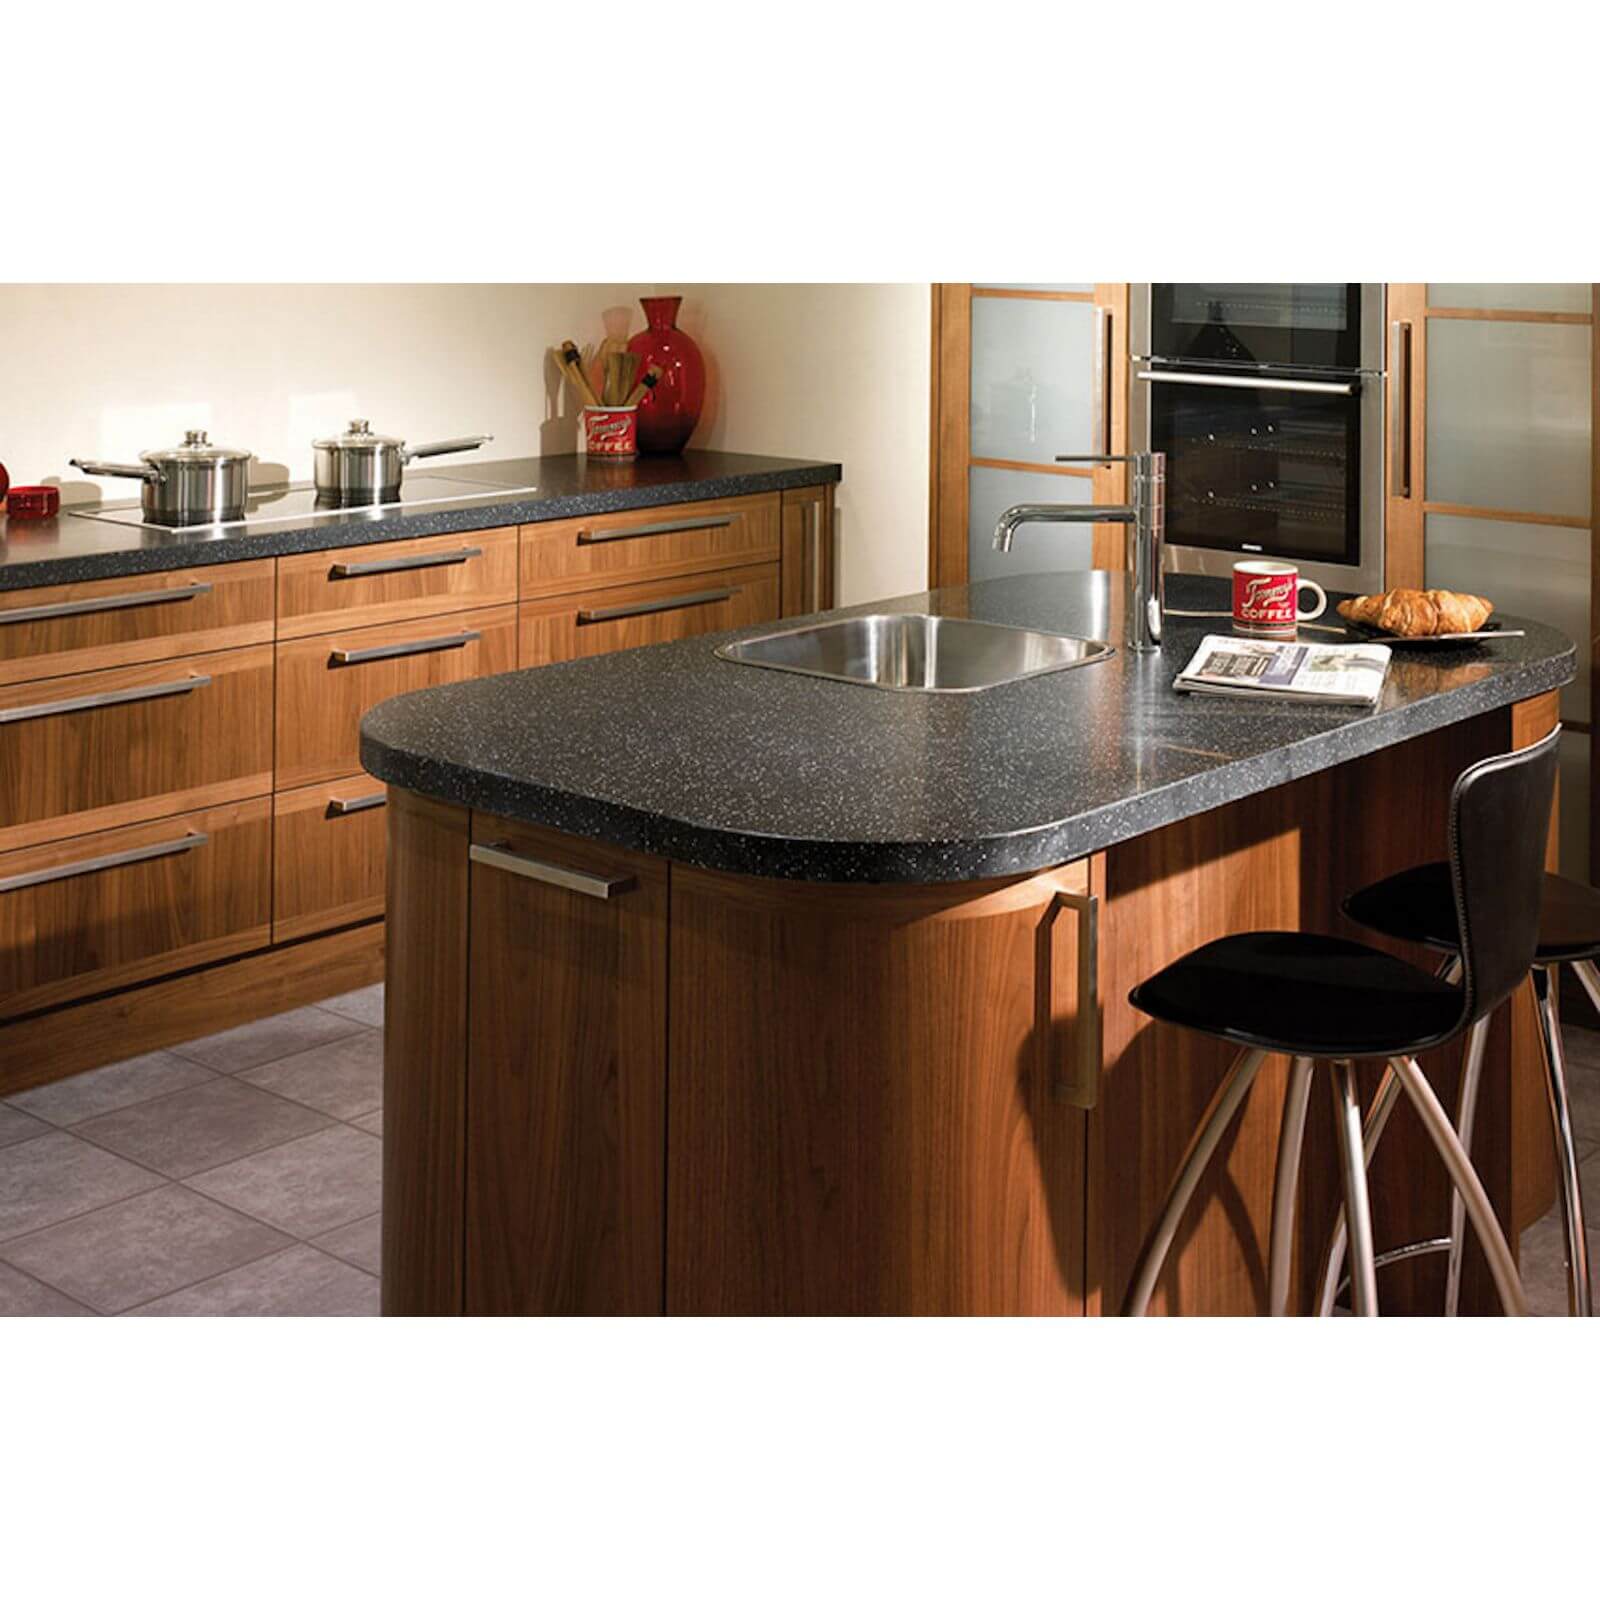 Maia Vulcano Kitchen Sink Worktop - Universal Super Large Bowl - 3600 x 600 x 28mm